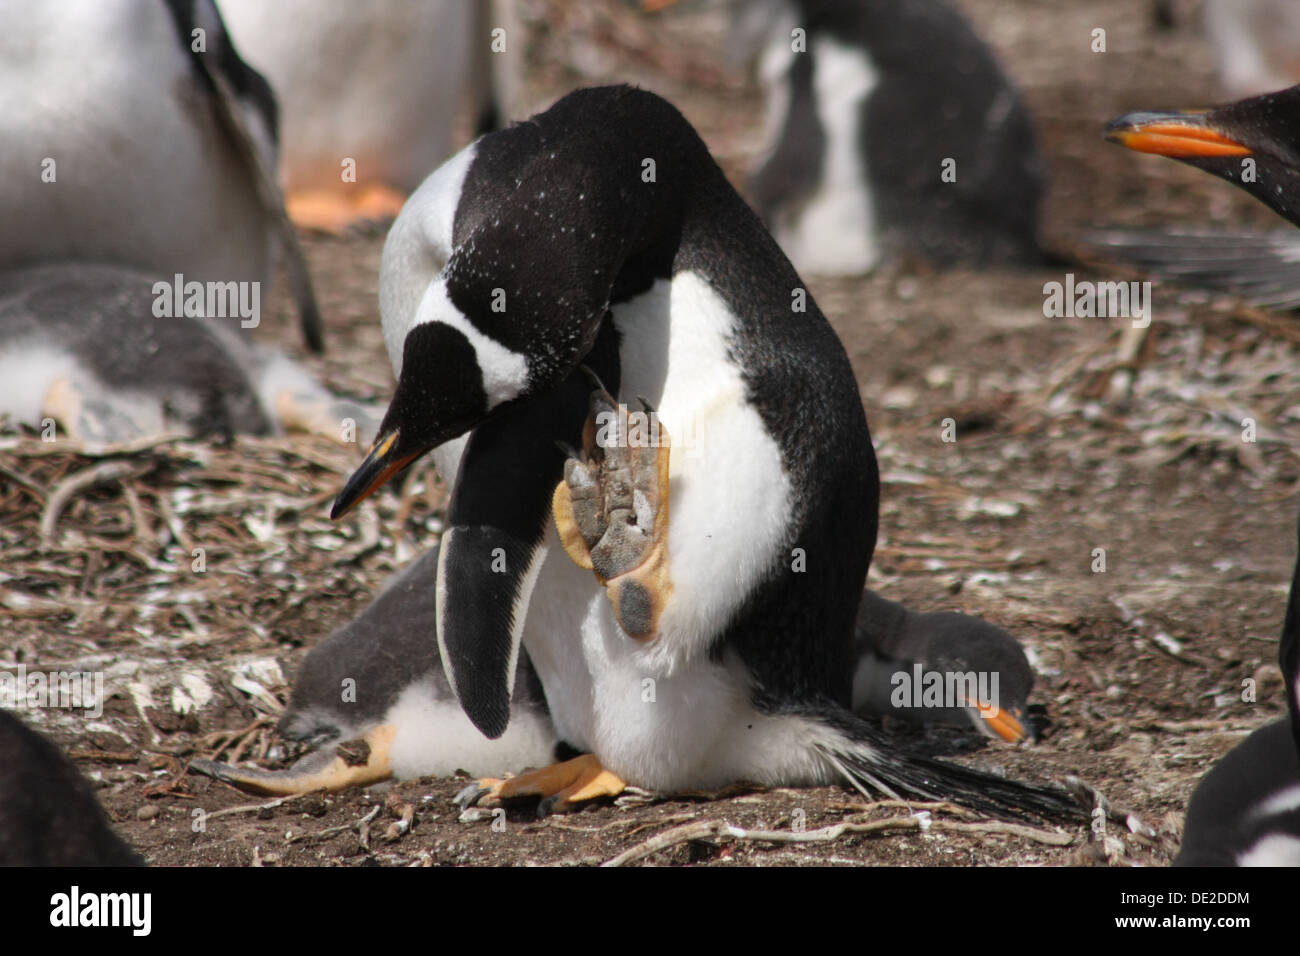 Gentoo penguin scratching with foot, Falkland Islands Stock Photo